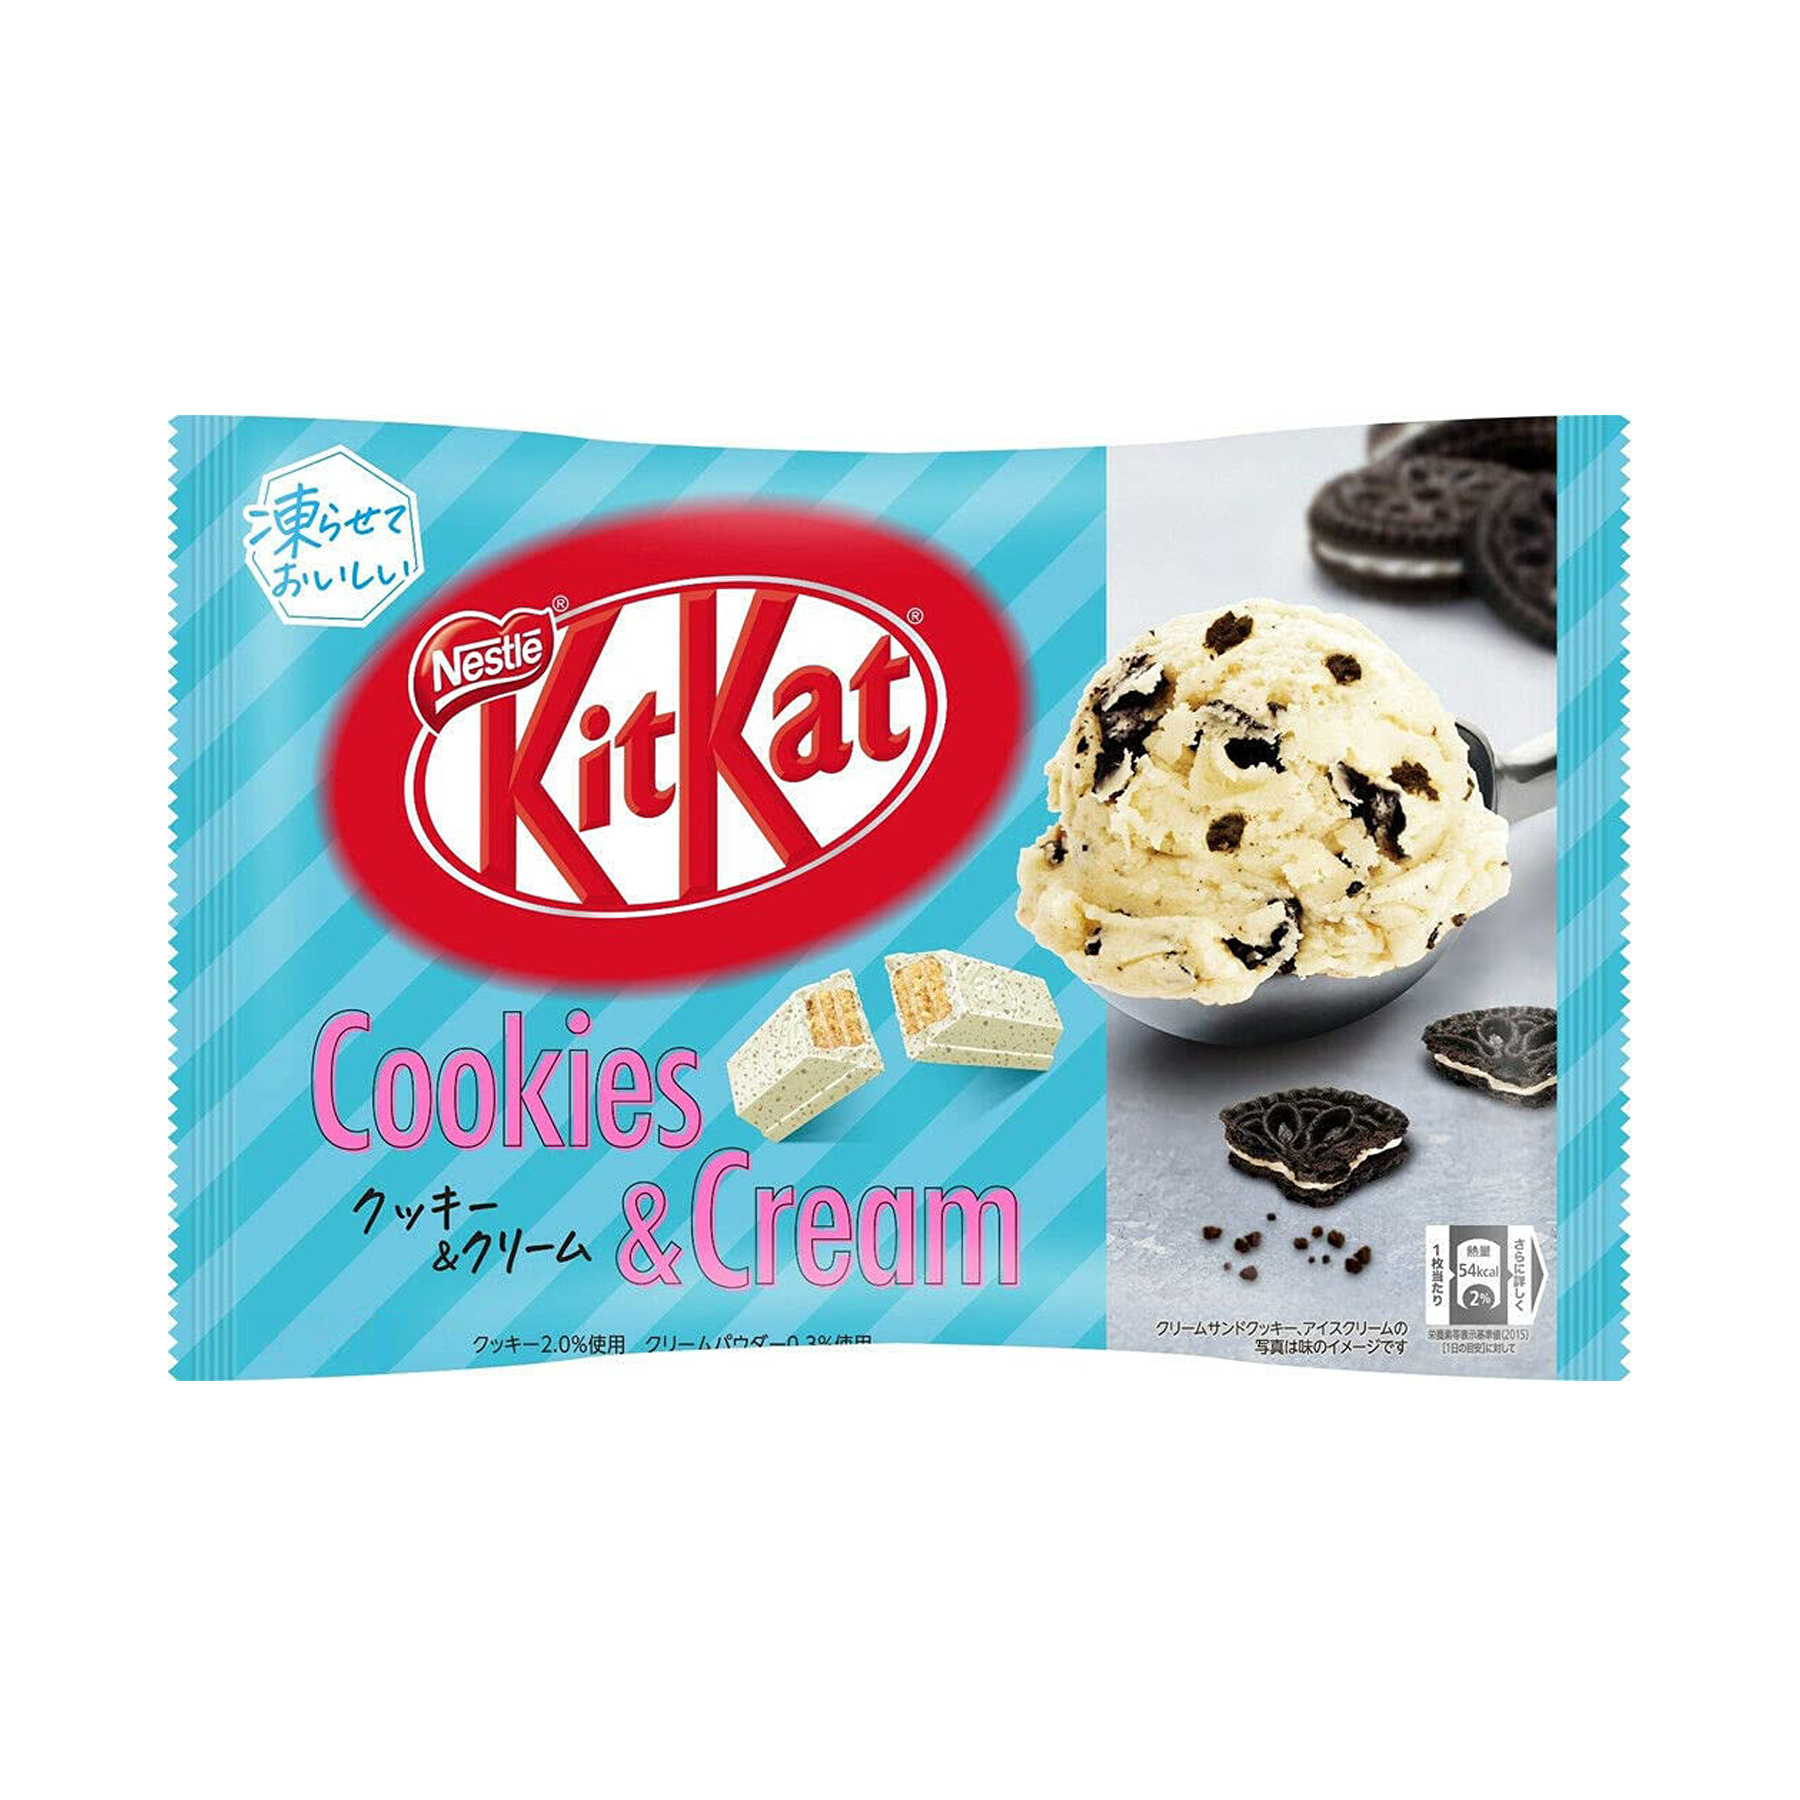 Kitkat Cookies & Cream